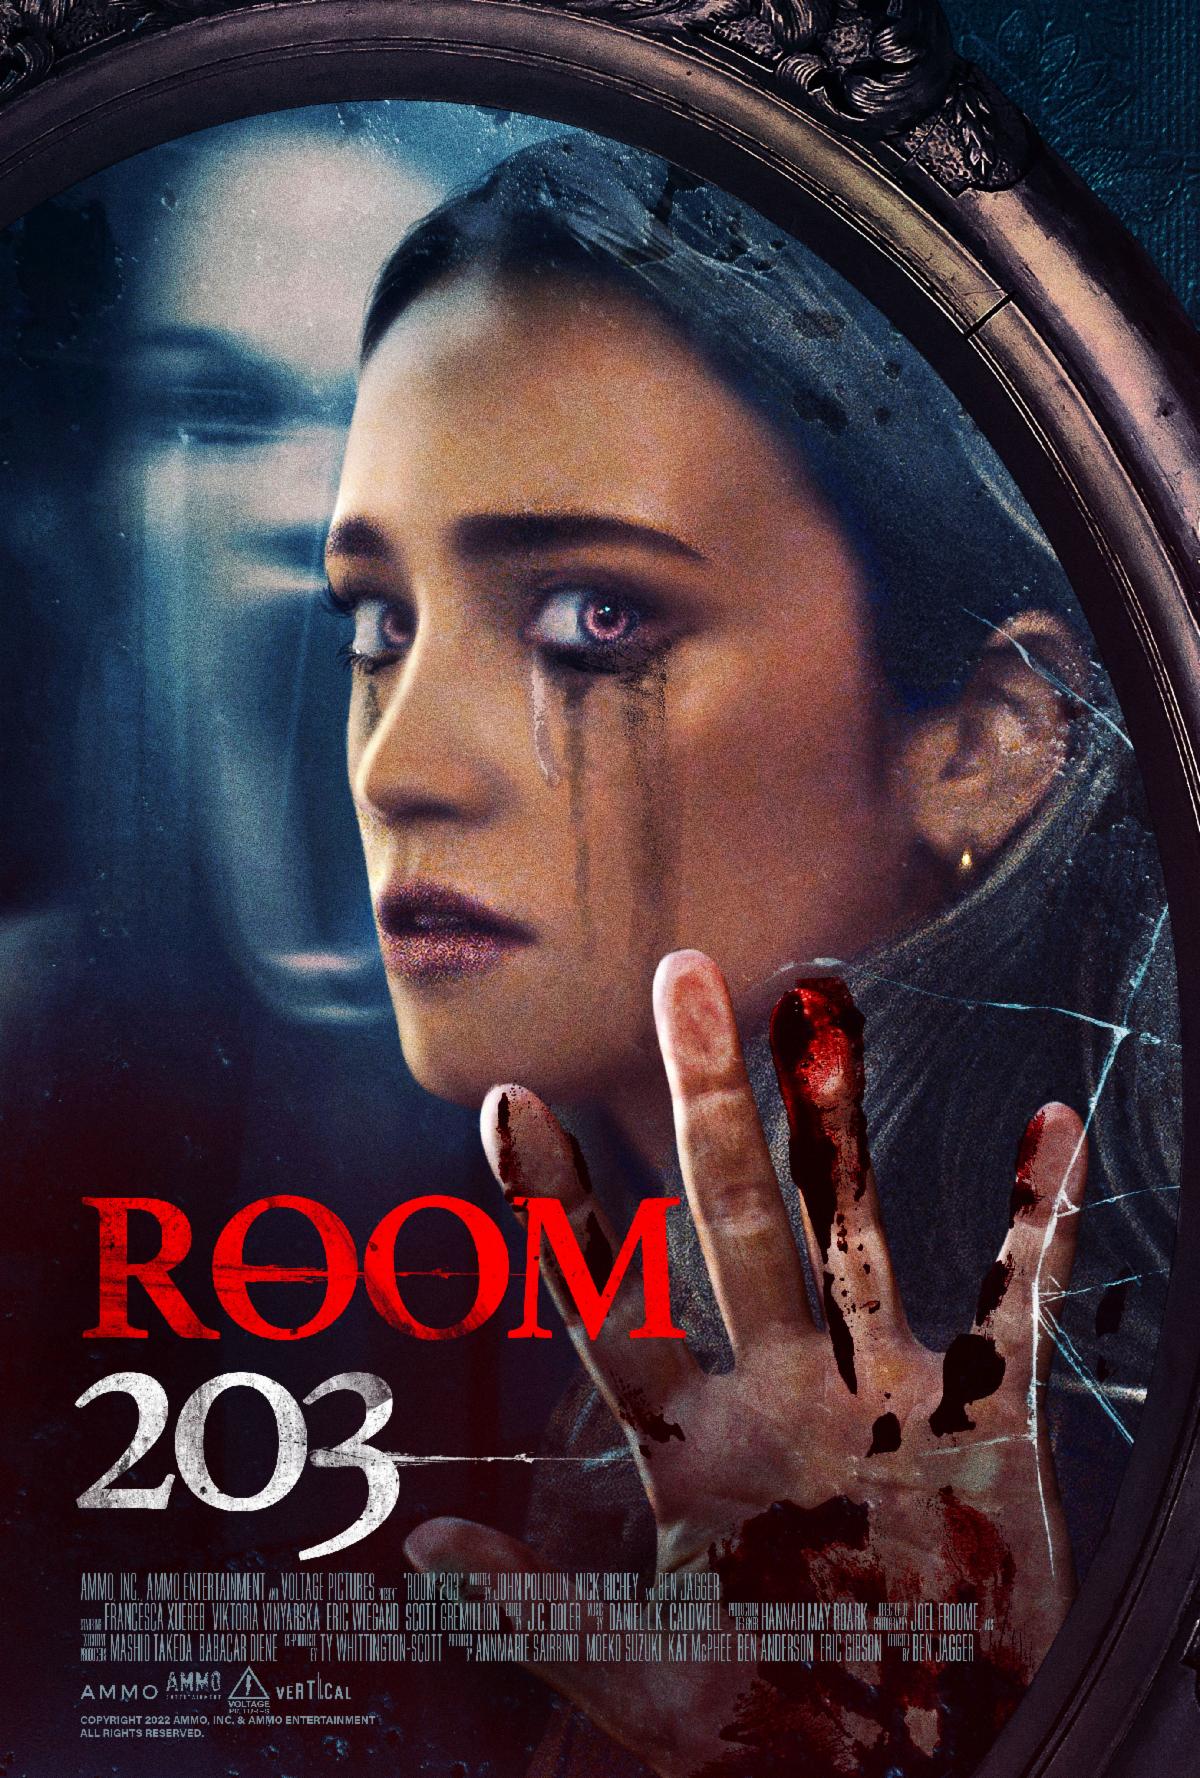 Room 203 trailer